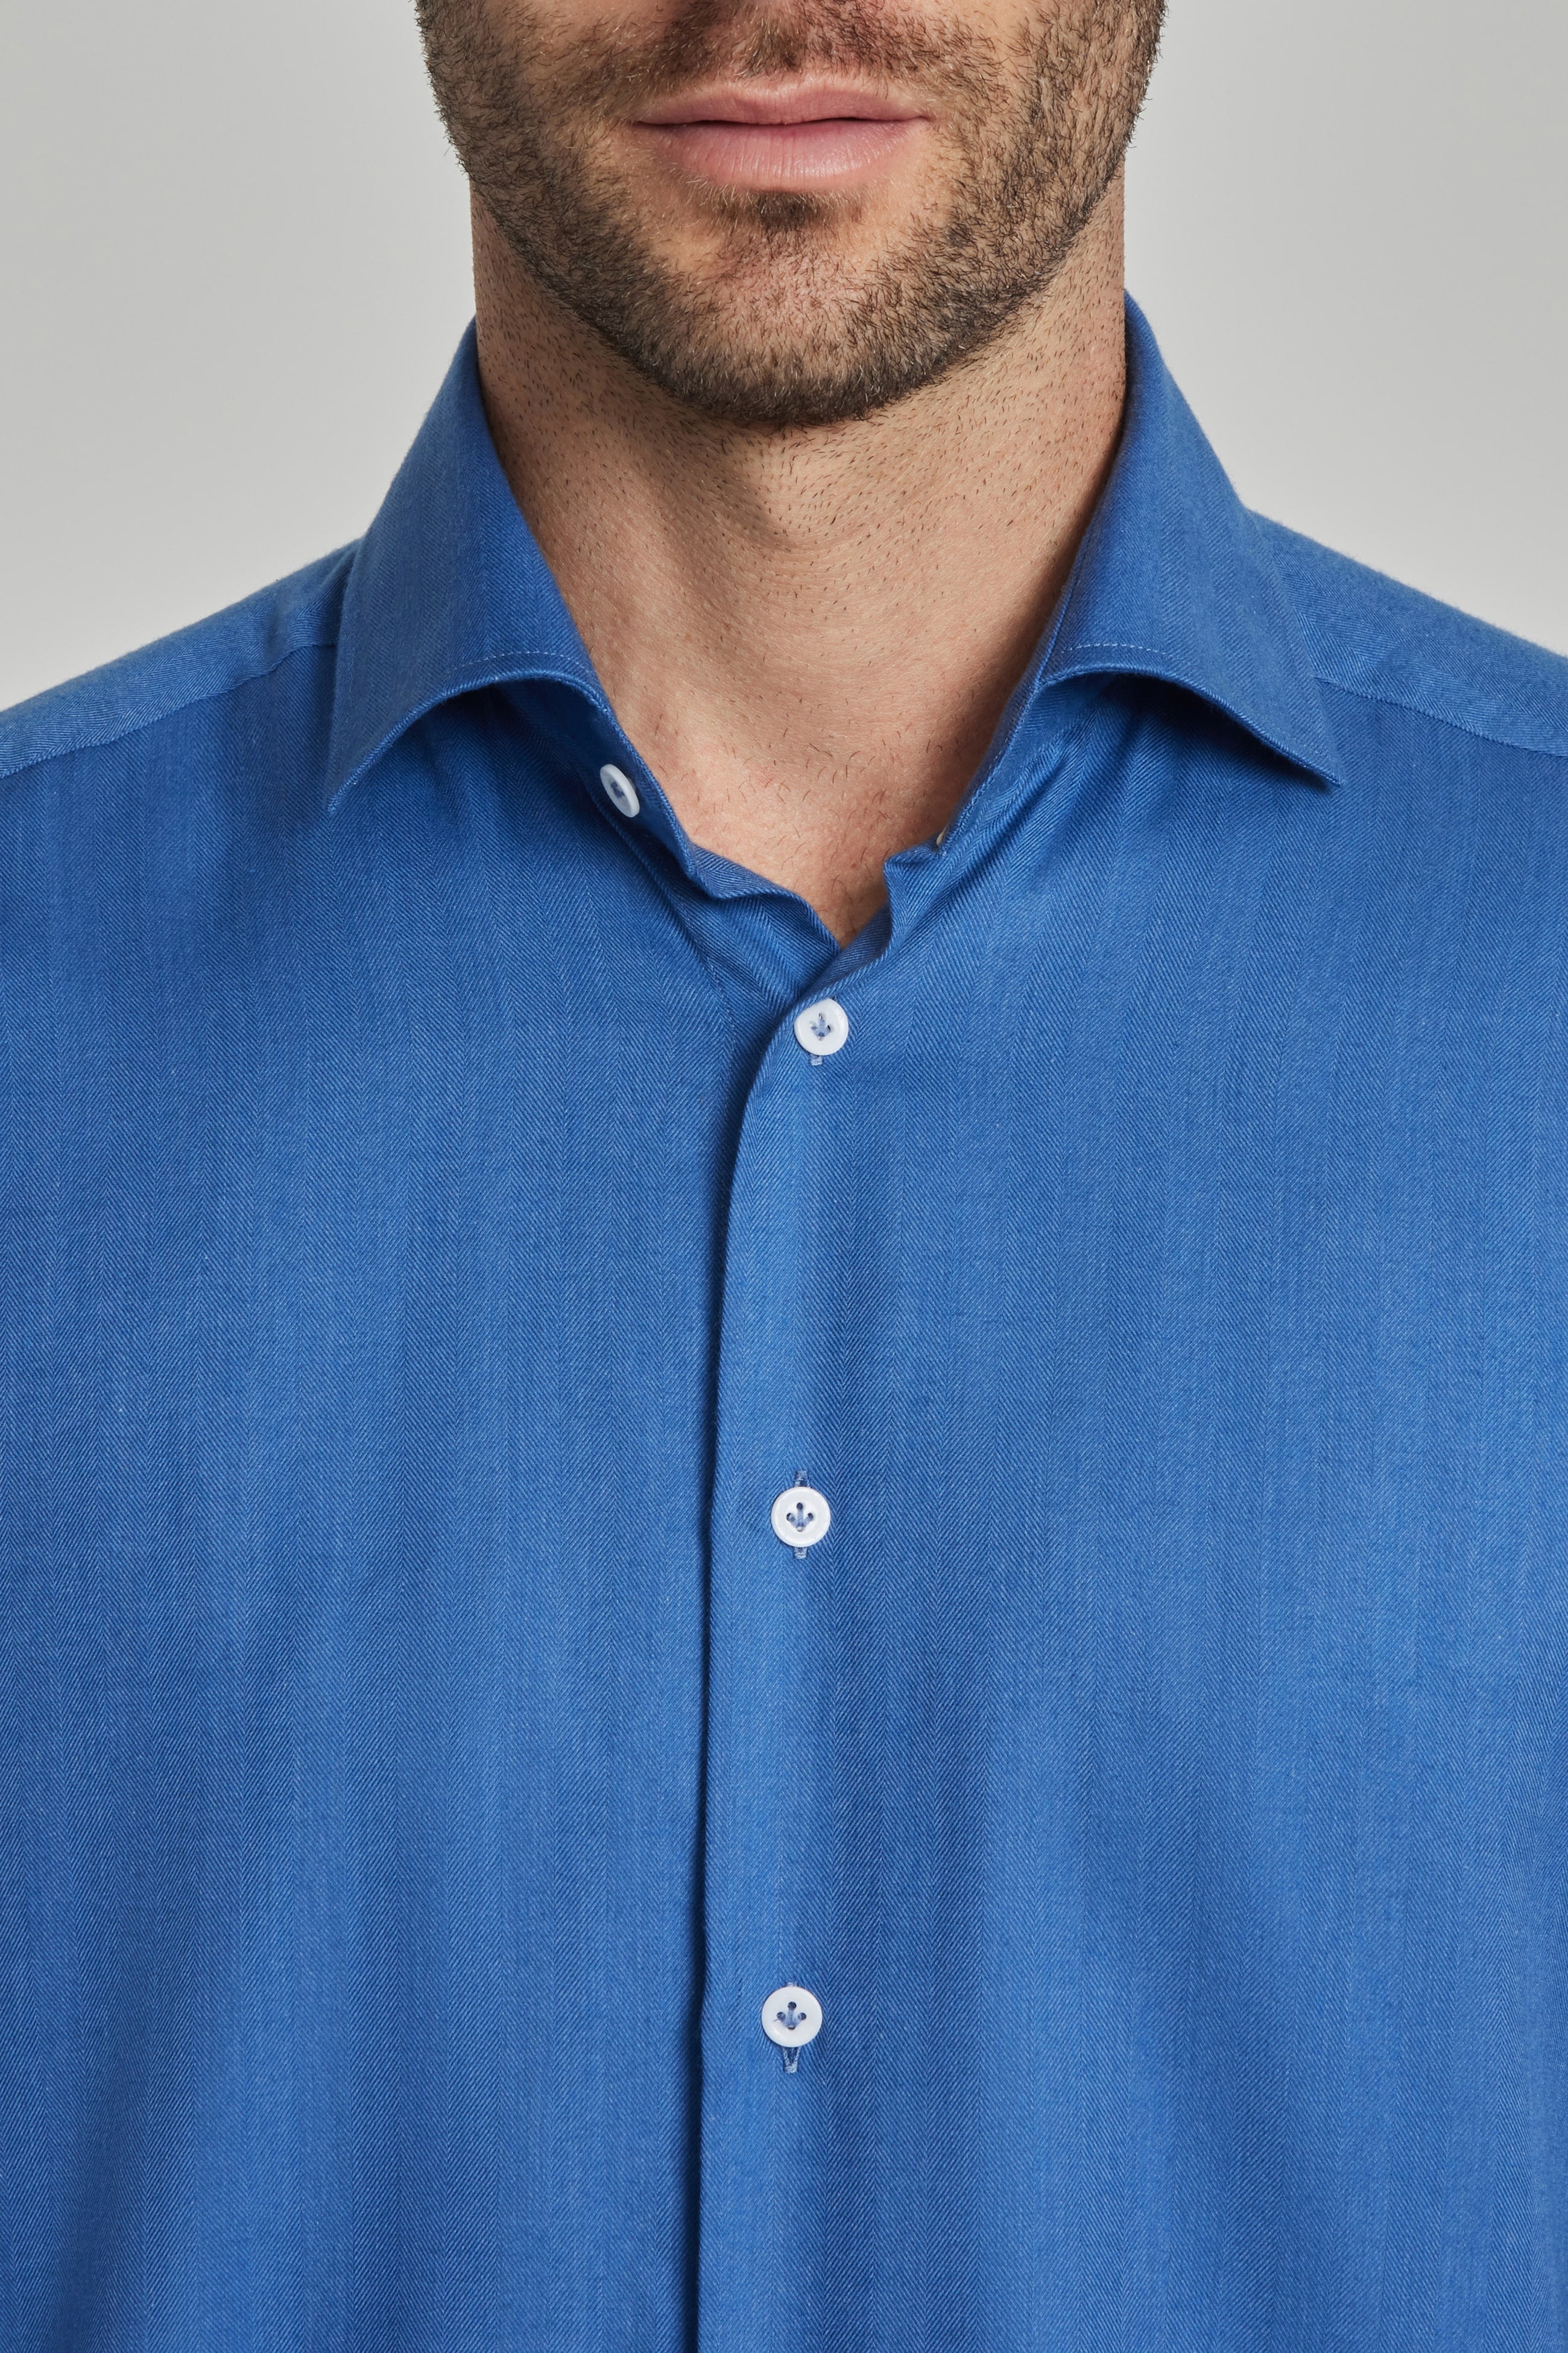 Bellamy Blue Herringbone Cotton and Lyocell Shirt